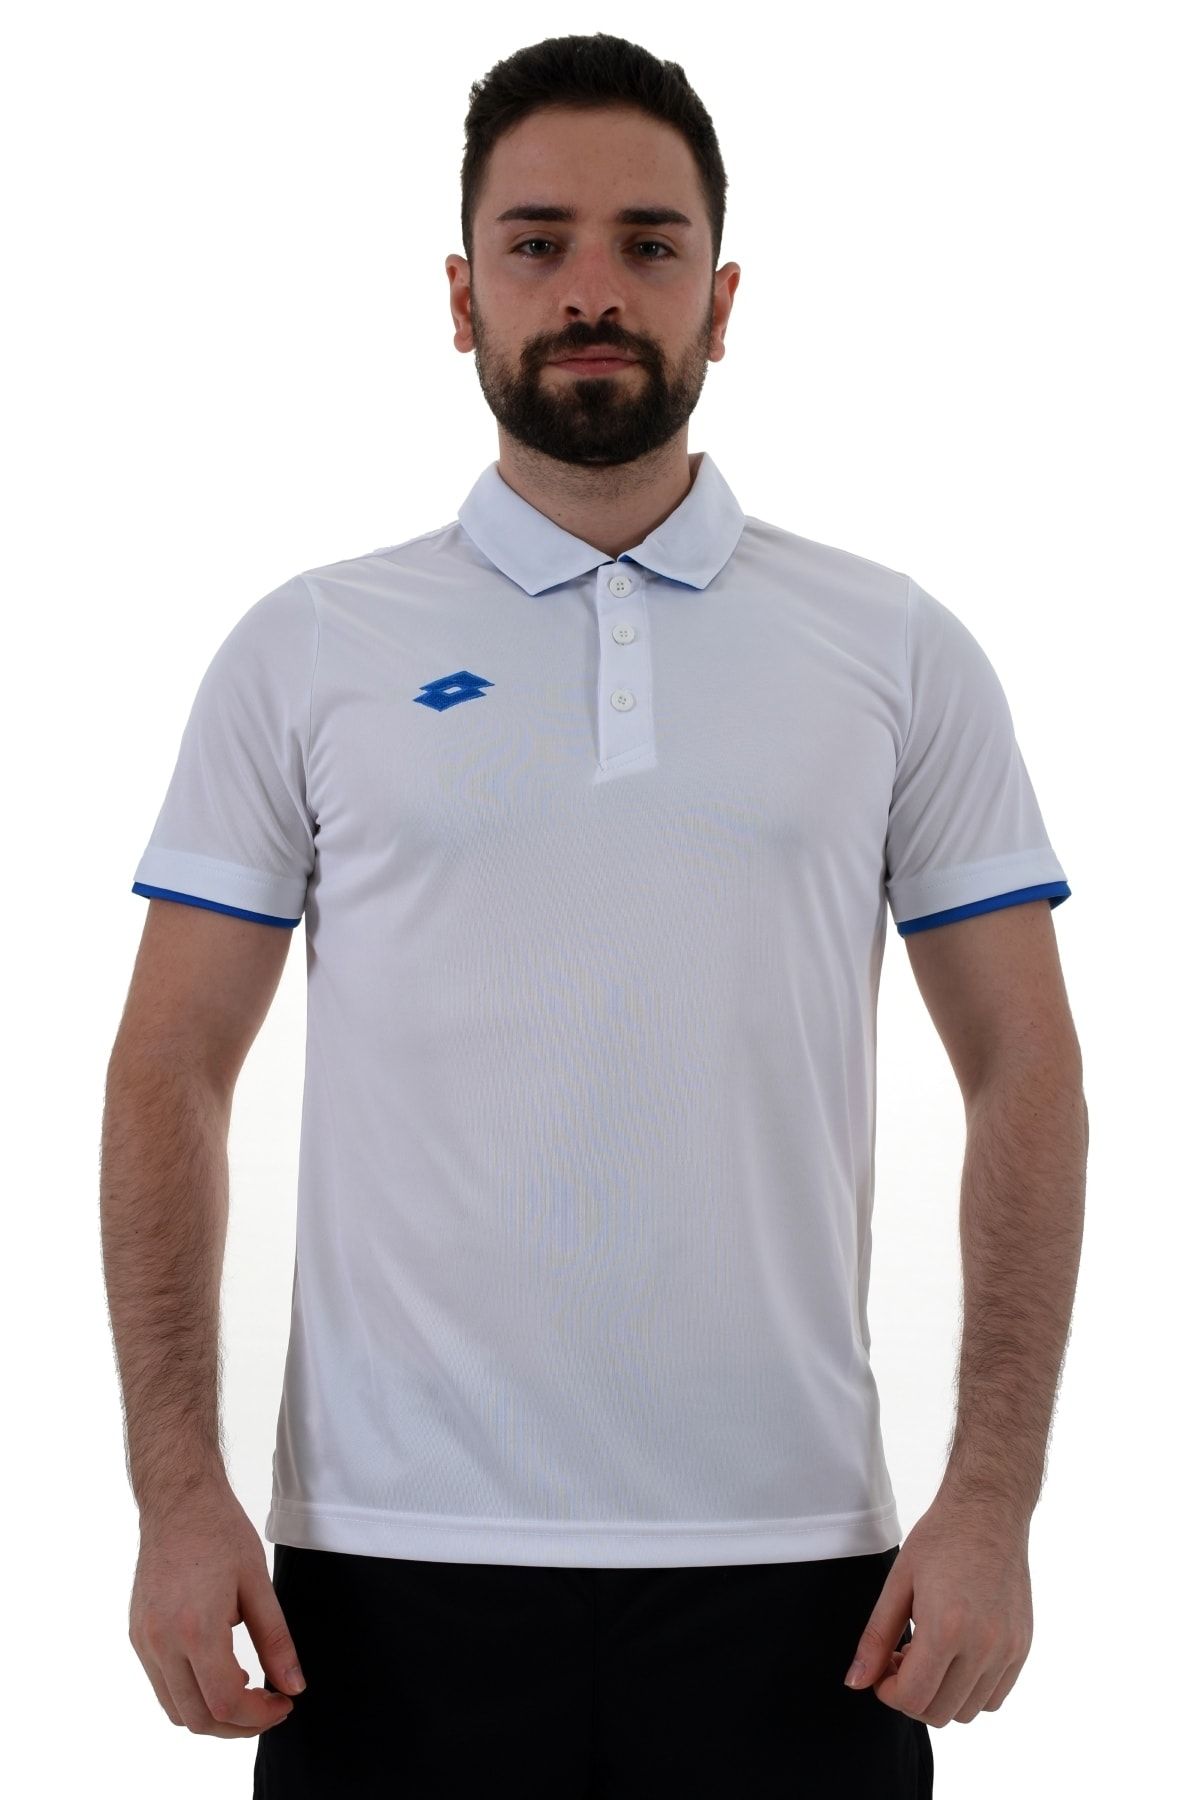 Lotto Polo T-shirt Erkek Beyaz/saks Mavi-ray Polo Camp Pl-r8983